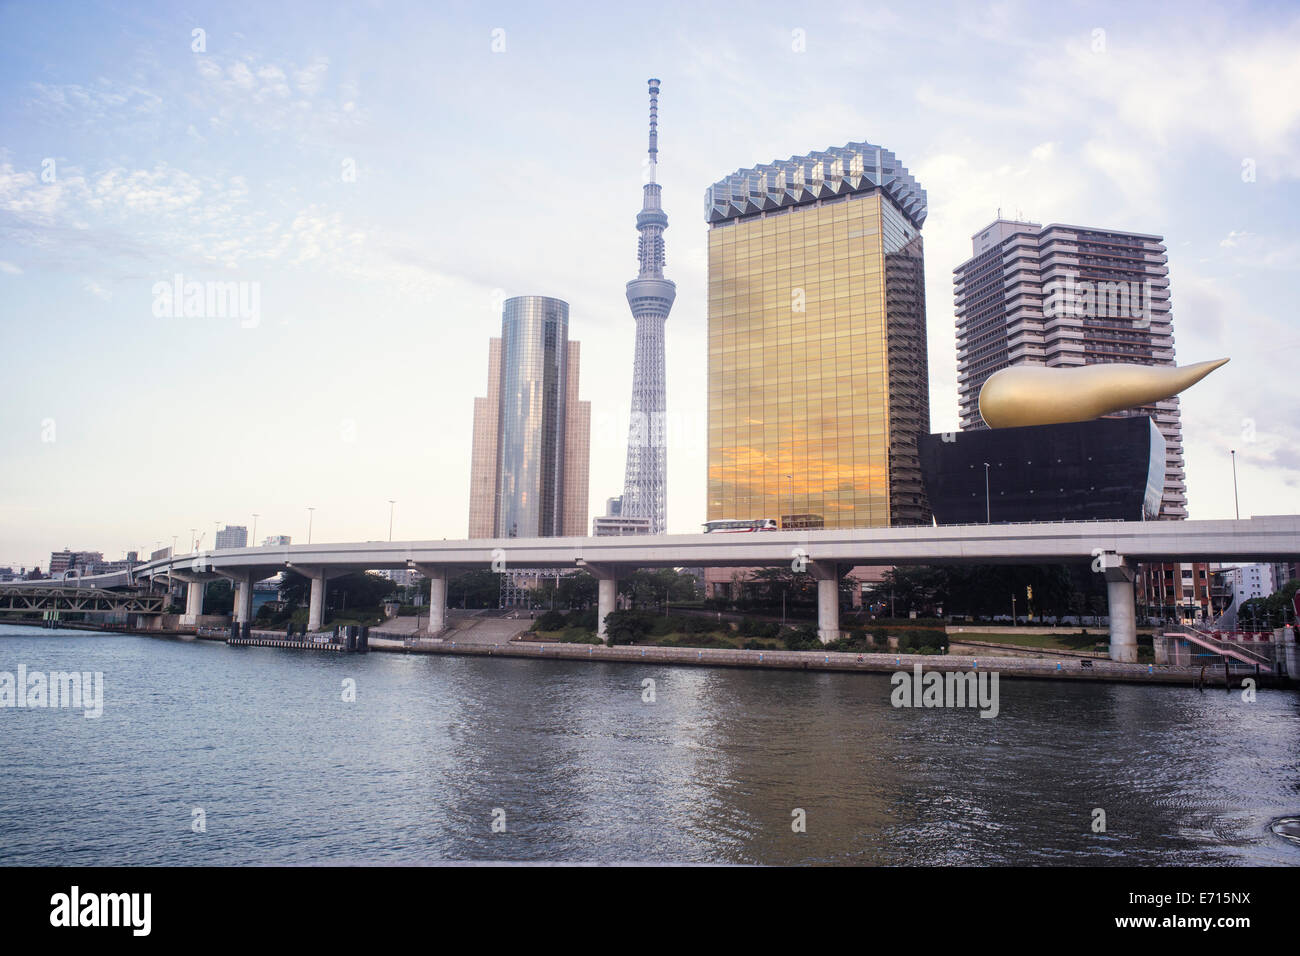 Giappone, Tokyo Tokyo Skytree con birra Asahi hall e il fiume Sumida Foto Stock